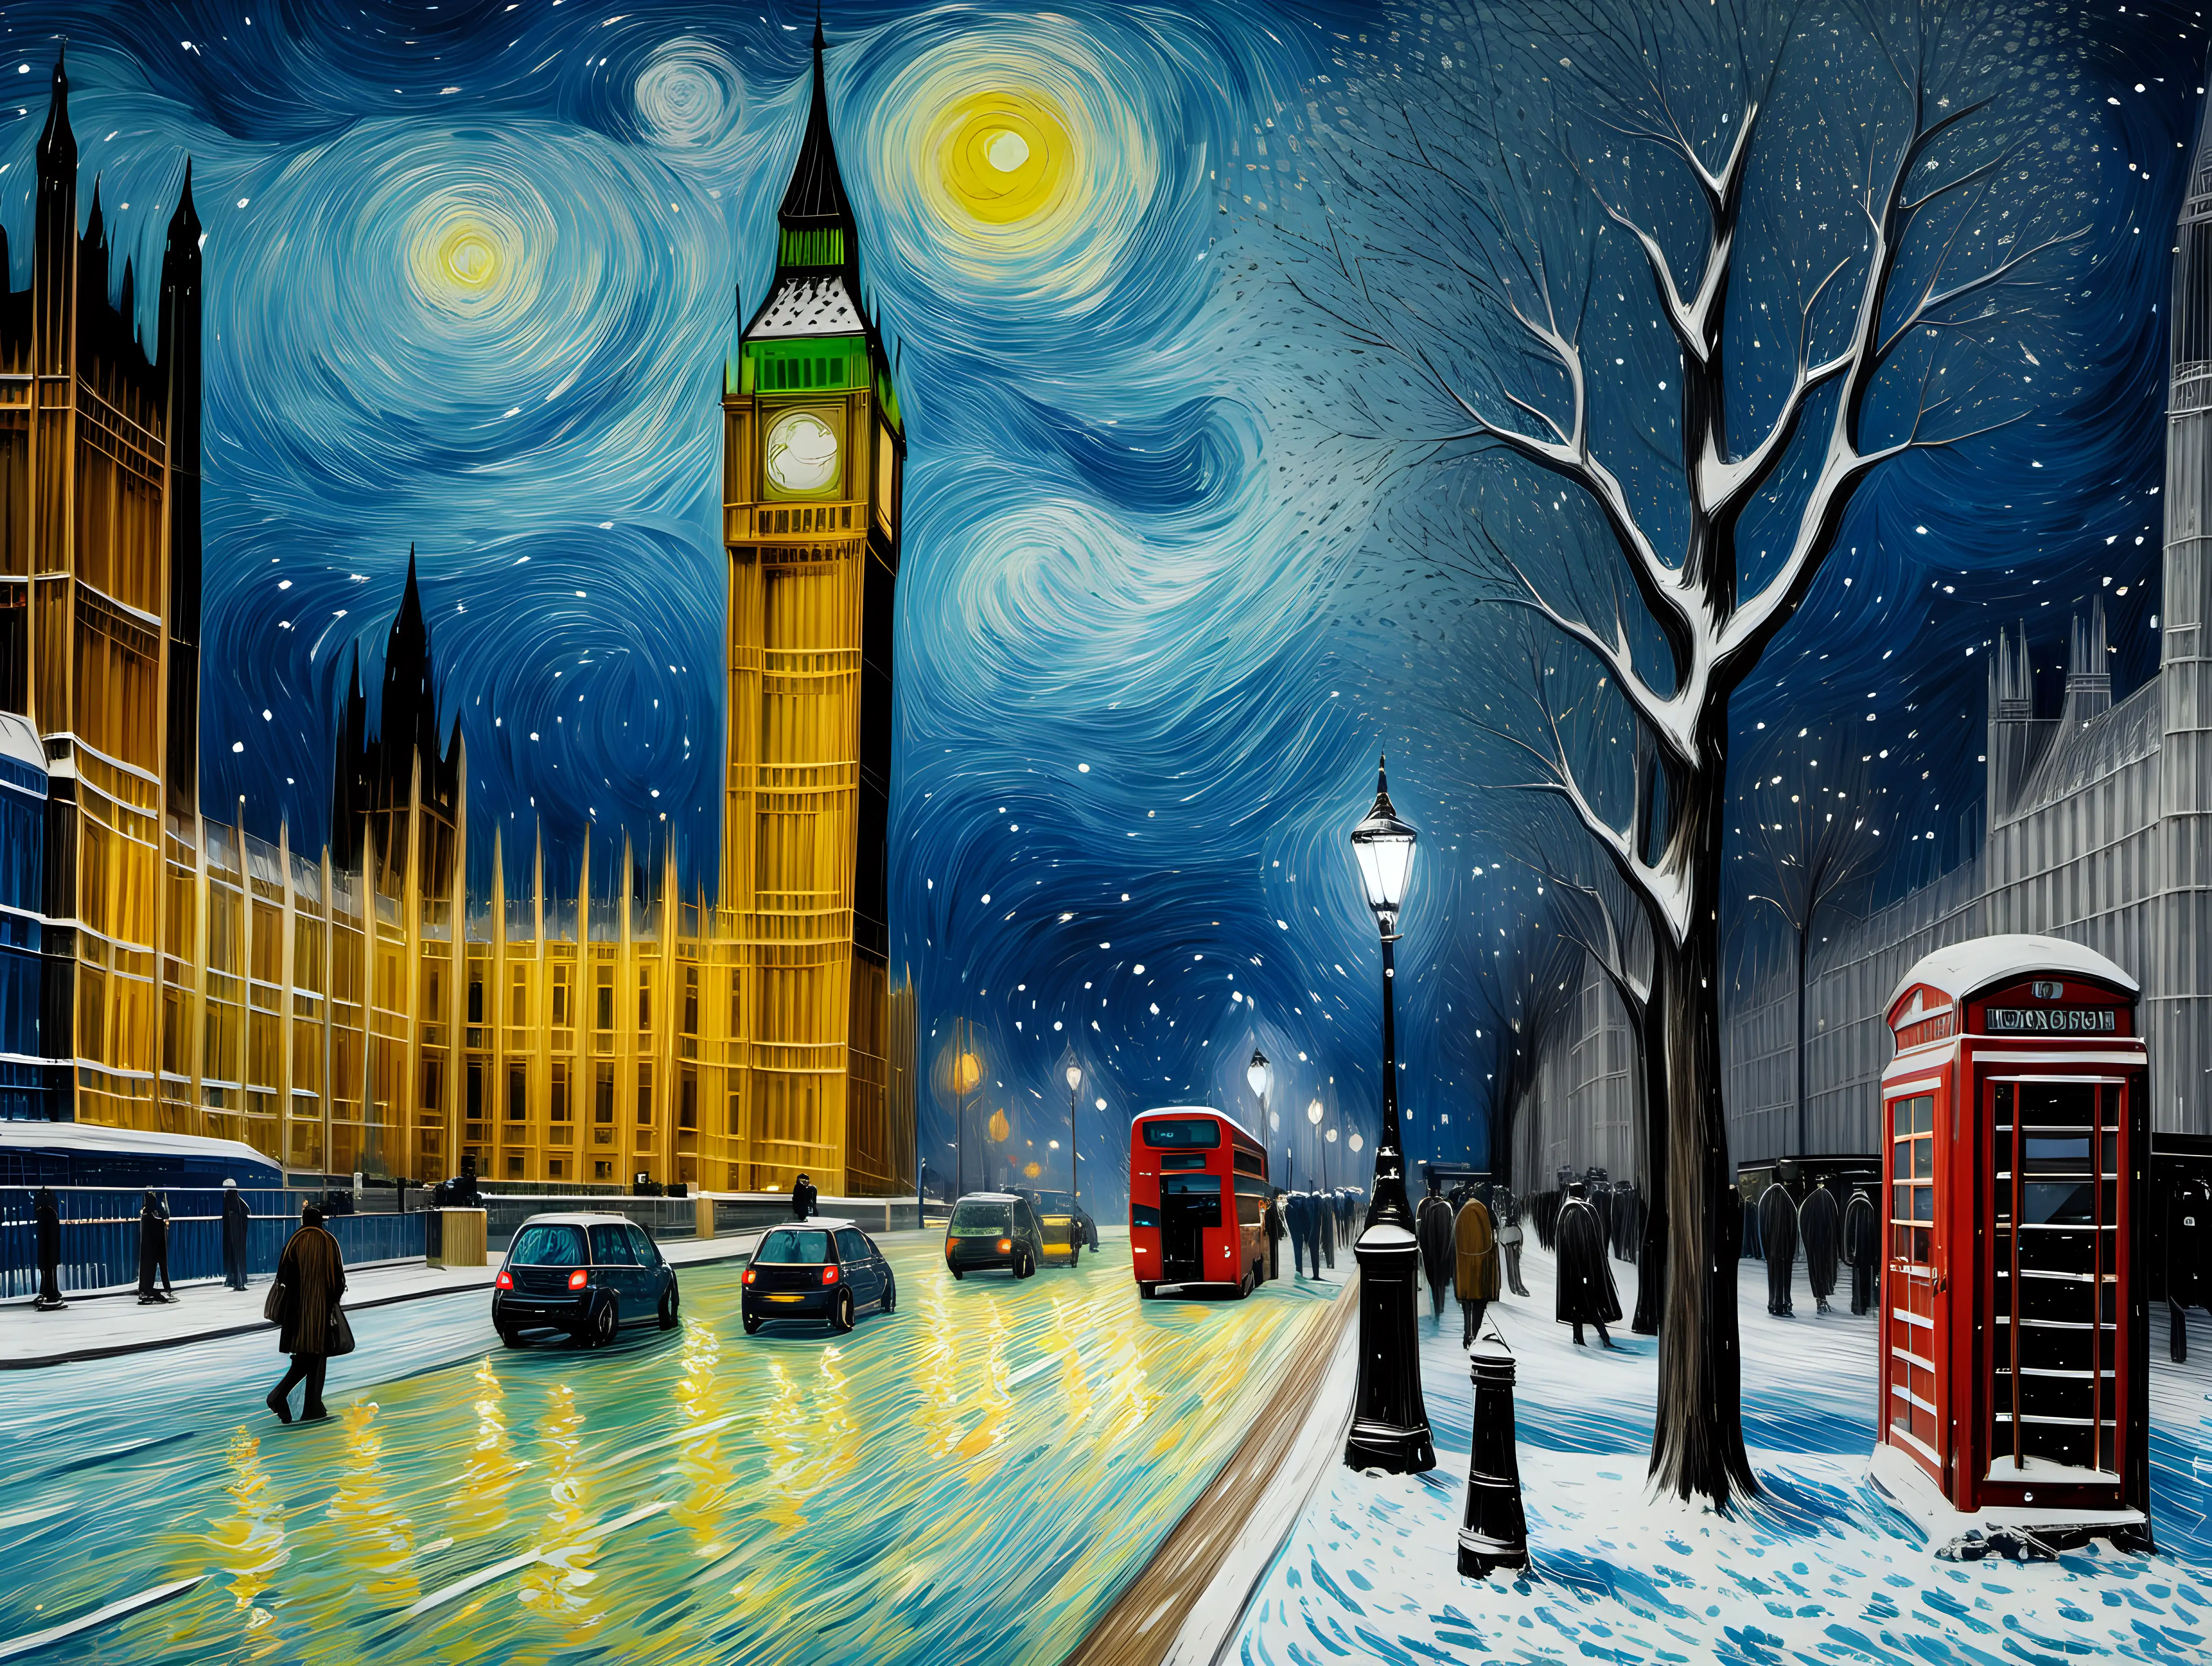 Van Gogh style snowing scene at Westminster parliament street